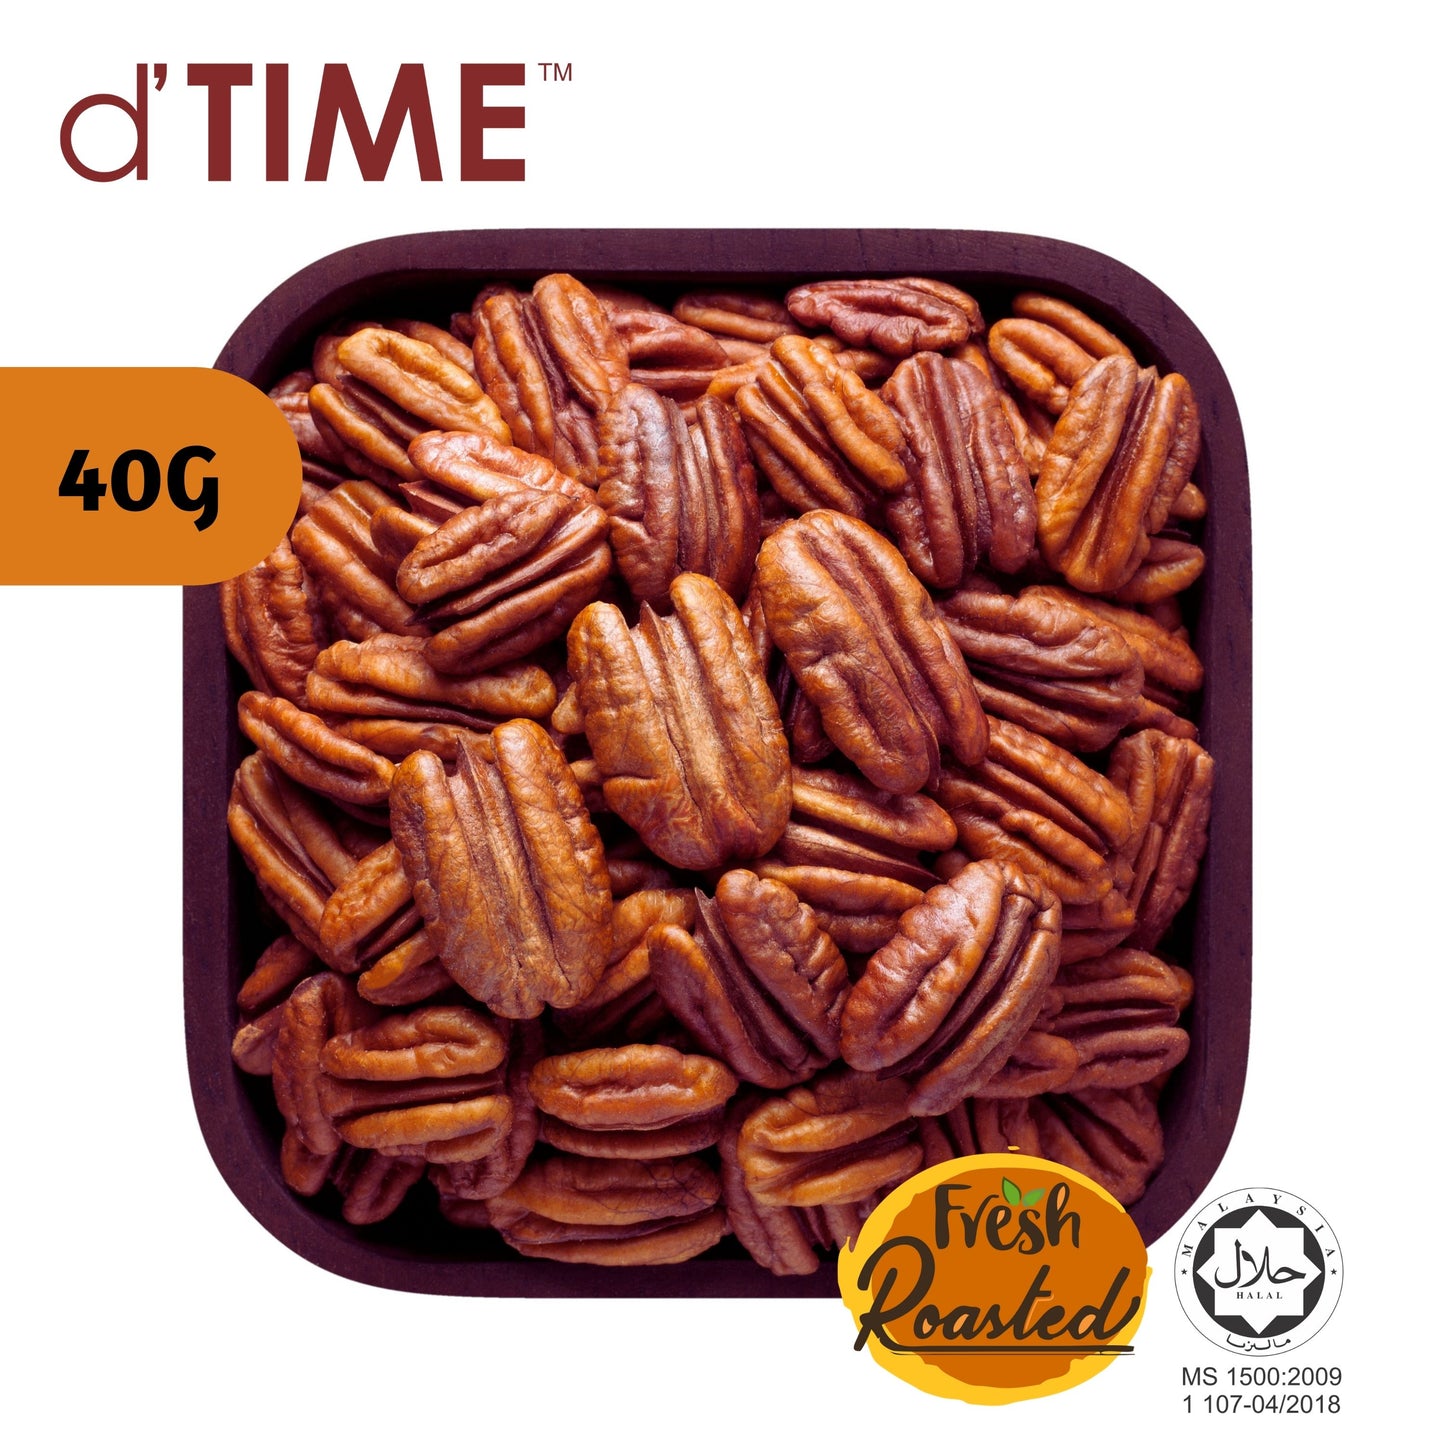 d'TIME Premium Roasted Pecan (40g,100g,200g,500g,1Kg))